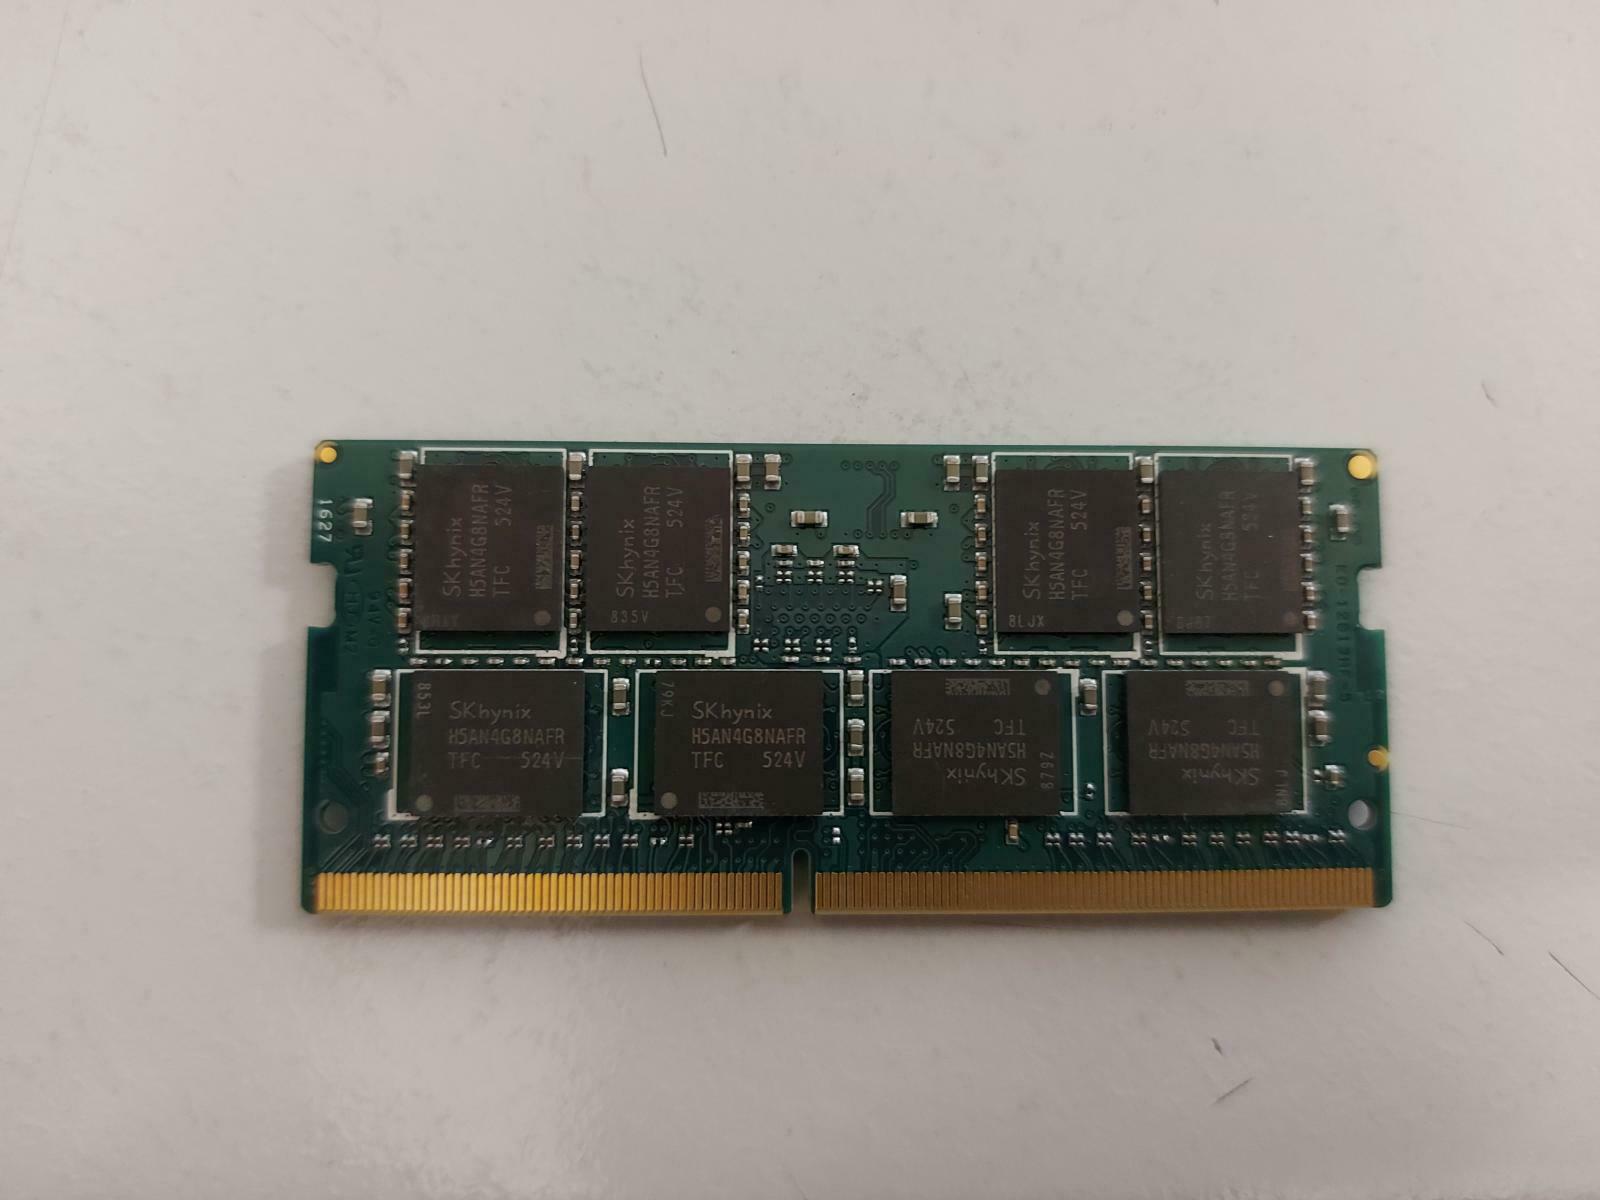 Generic 8GB PC4-17000 2133MHz DDR4 SODIMM Memory Module HY-0504 CP 12092016